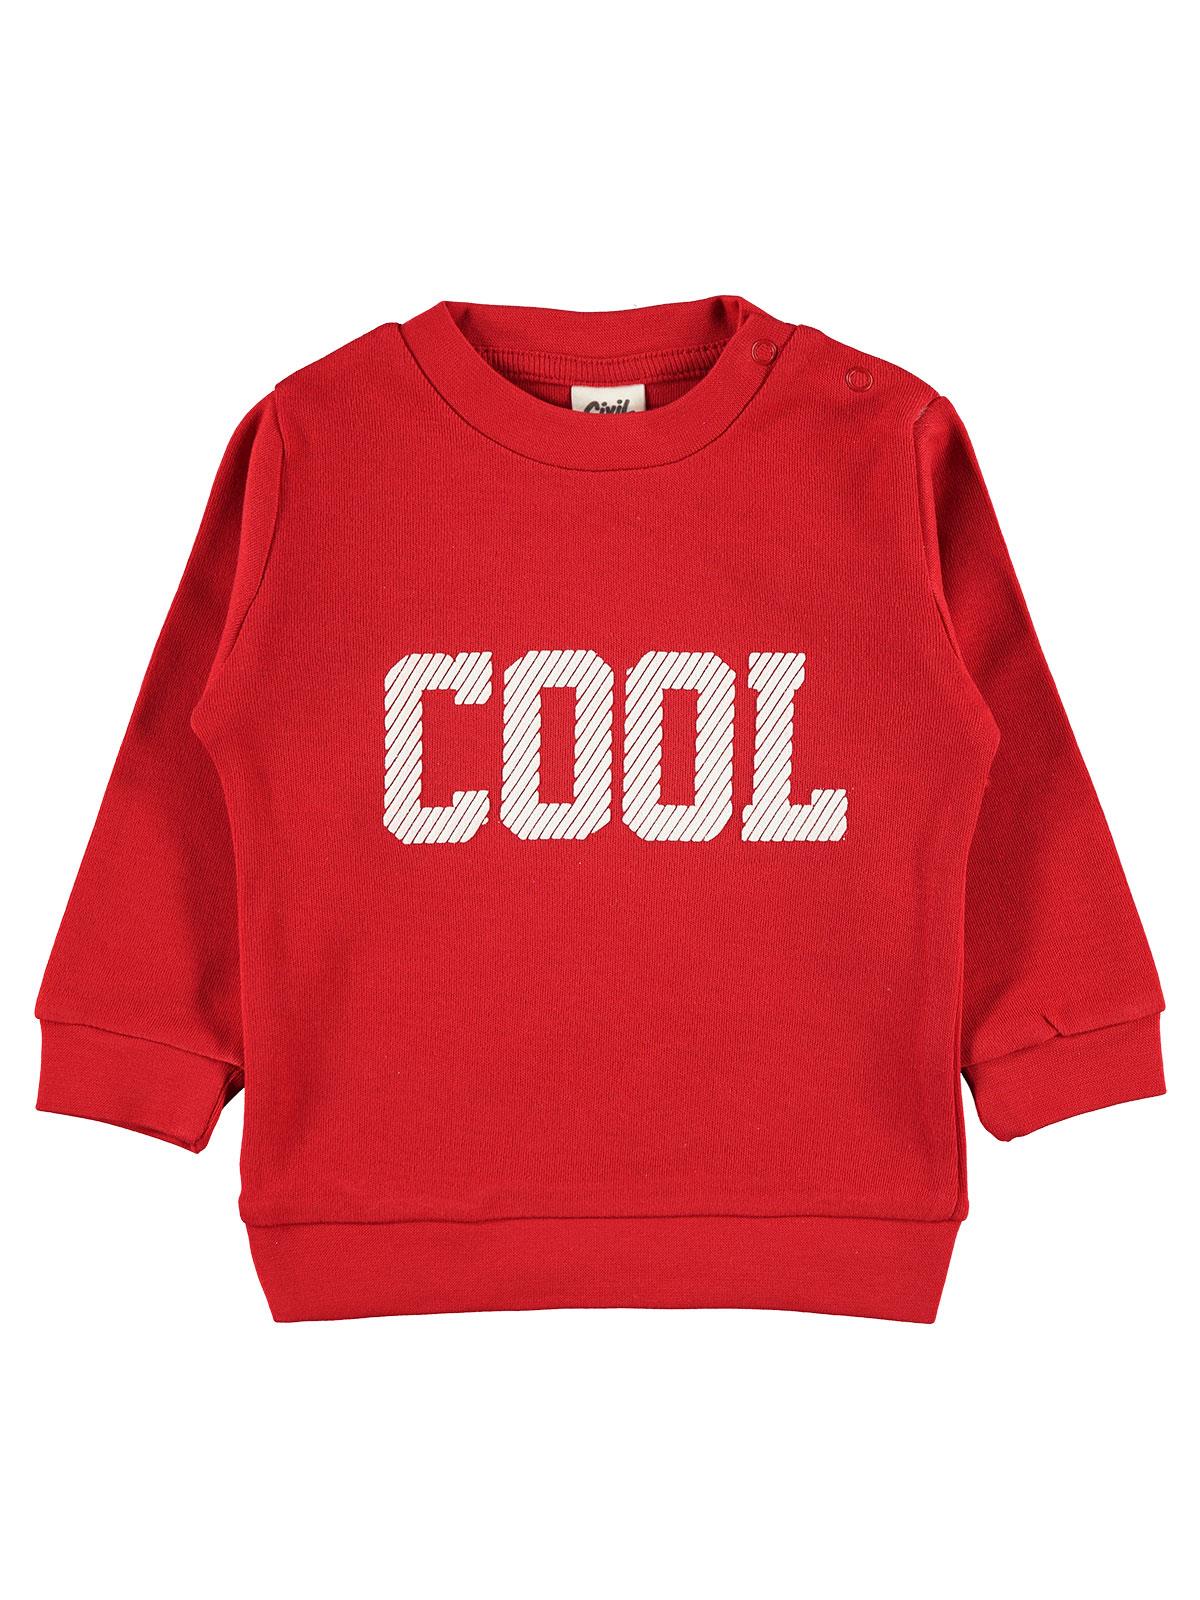 Civil Baby Bebek Sweatshirt 6-18 Ay Kırmızı